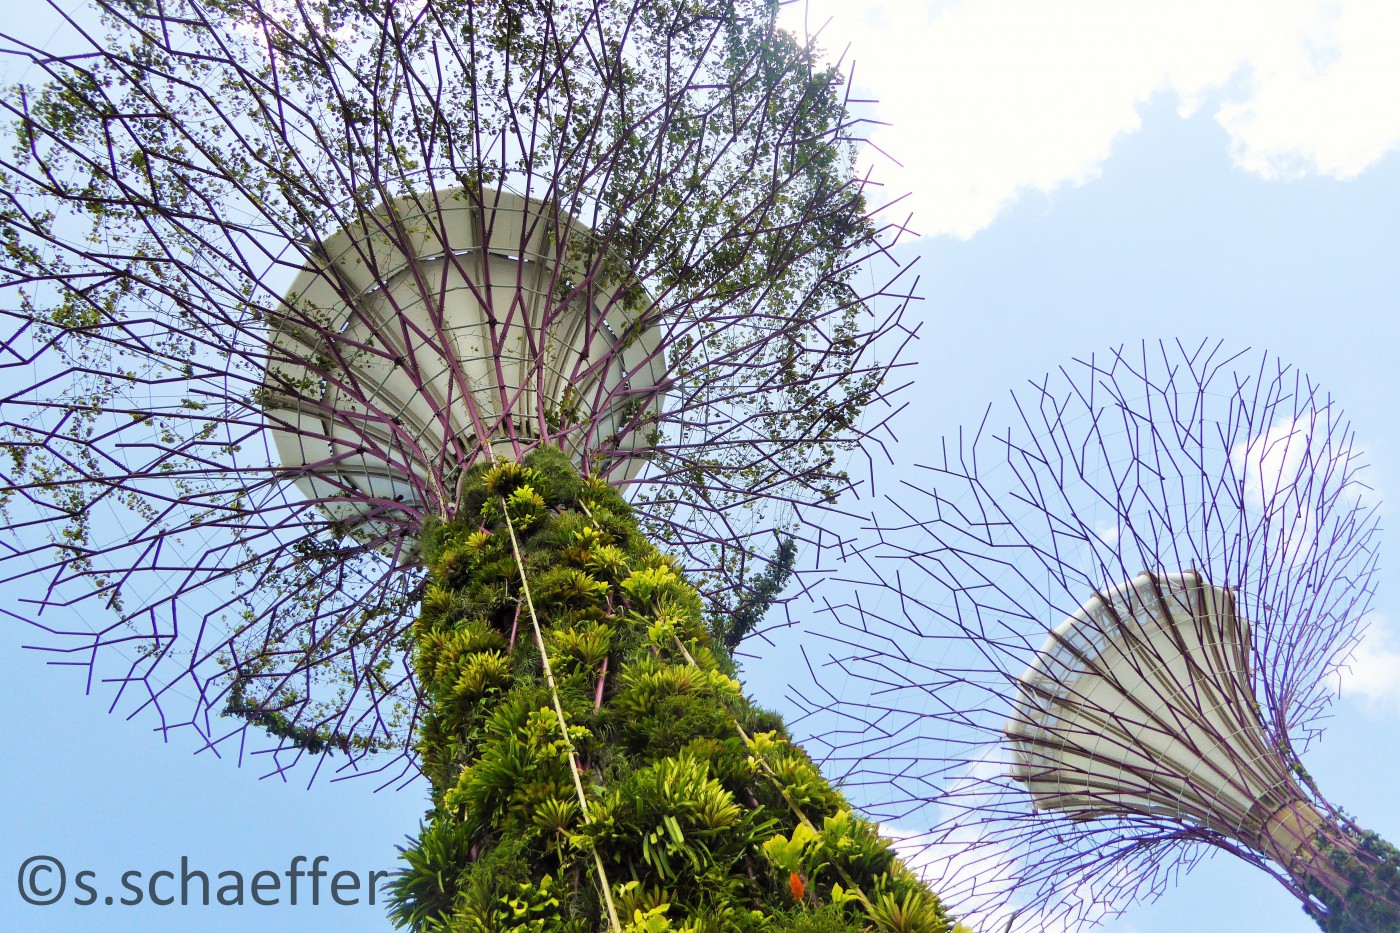 Gardens By the Bay Supertrees Singapur ©s.schaeffer